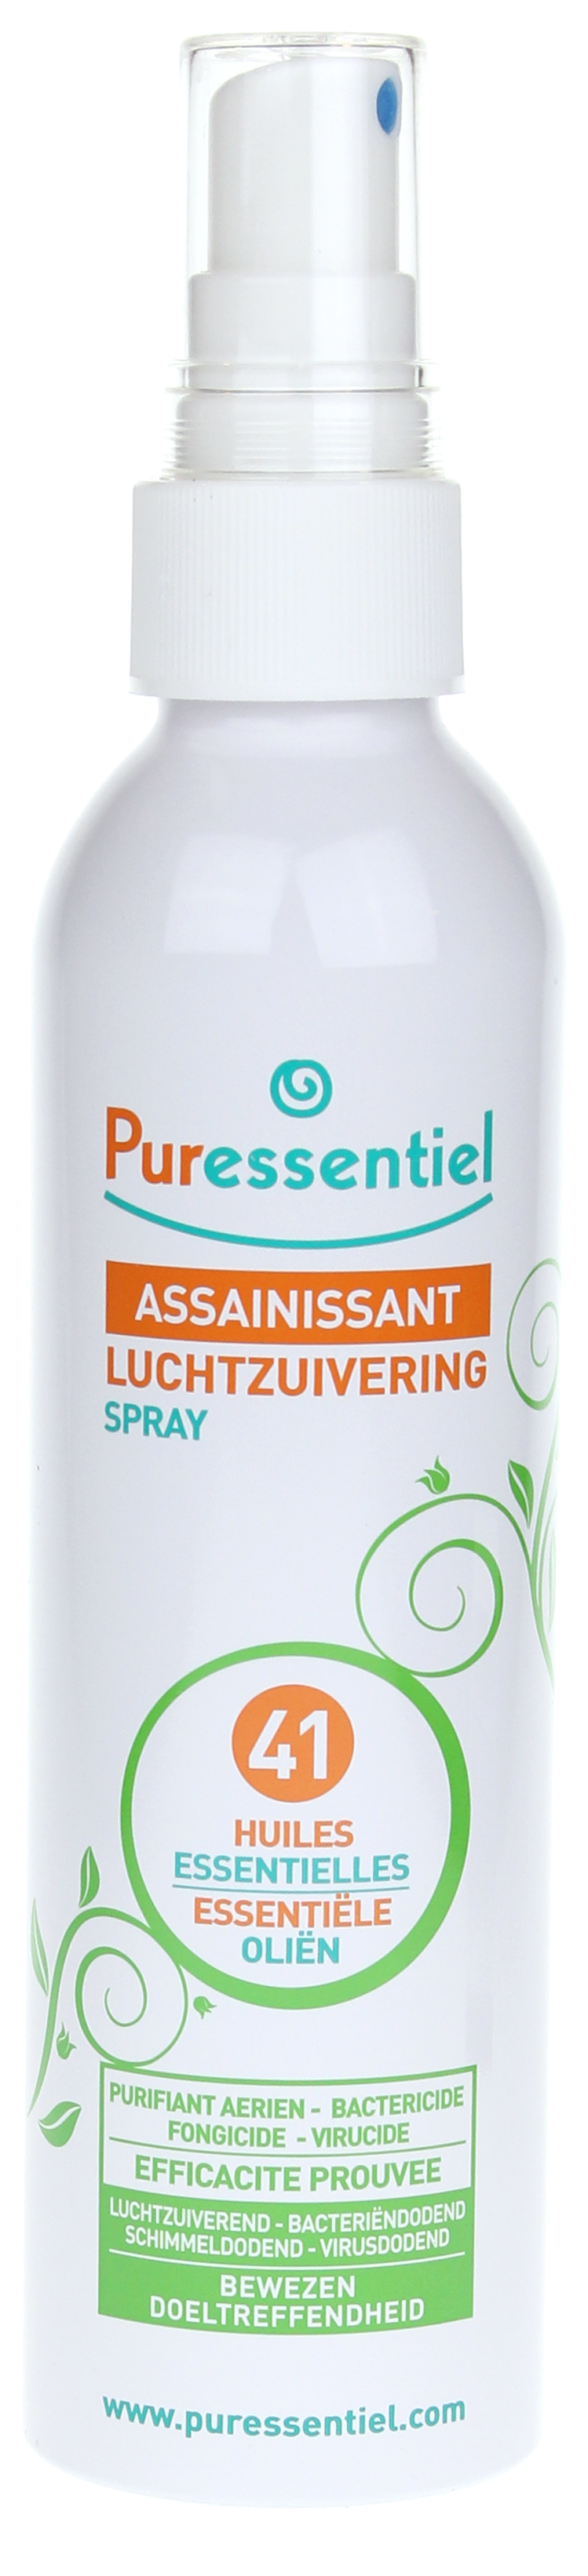 Pharma360: Puressentiel Spray 200mL - Assainit et Purifie l'Air